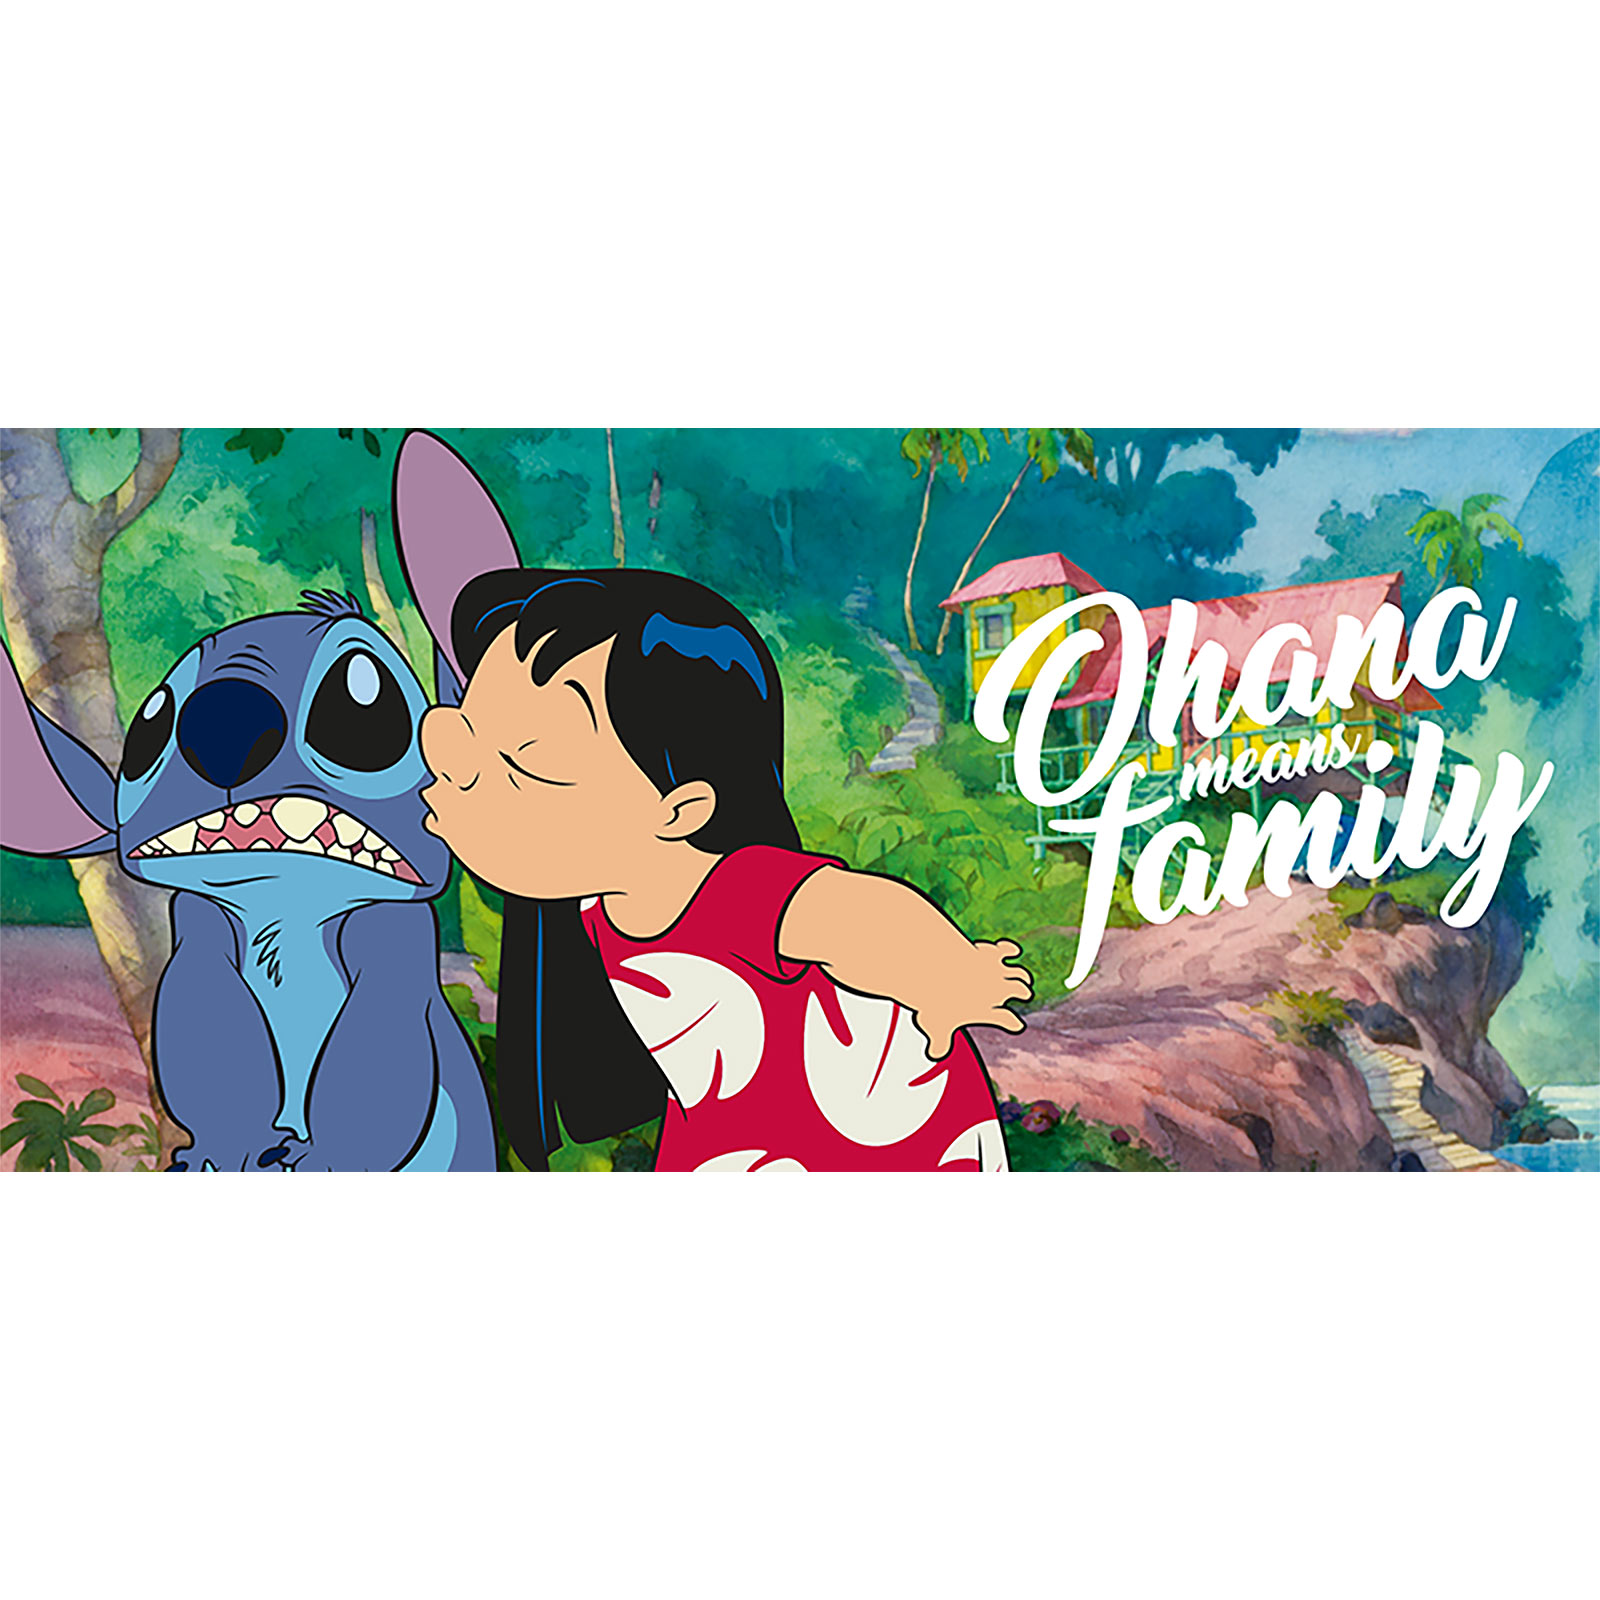 Lilo & Stitch - Ohana Means Family Tasse